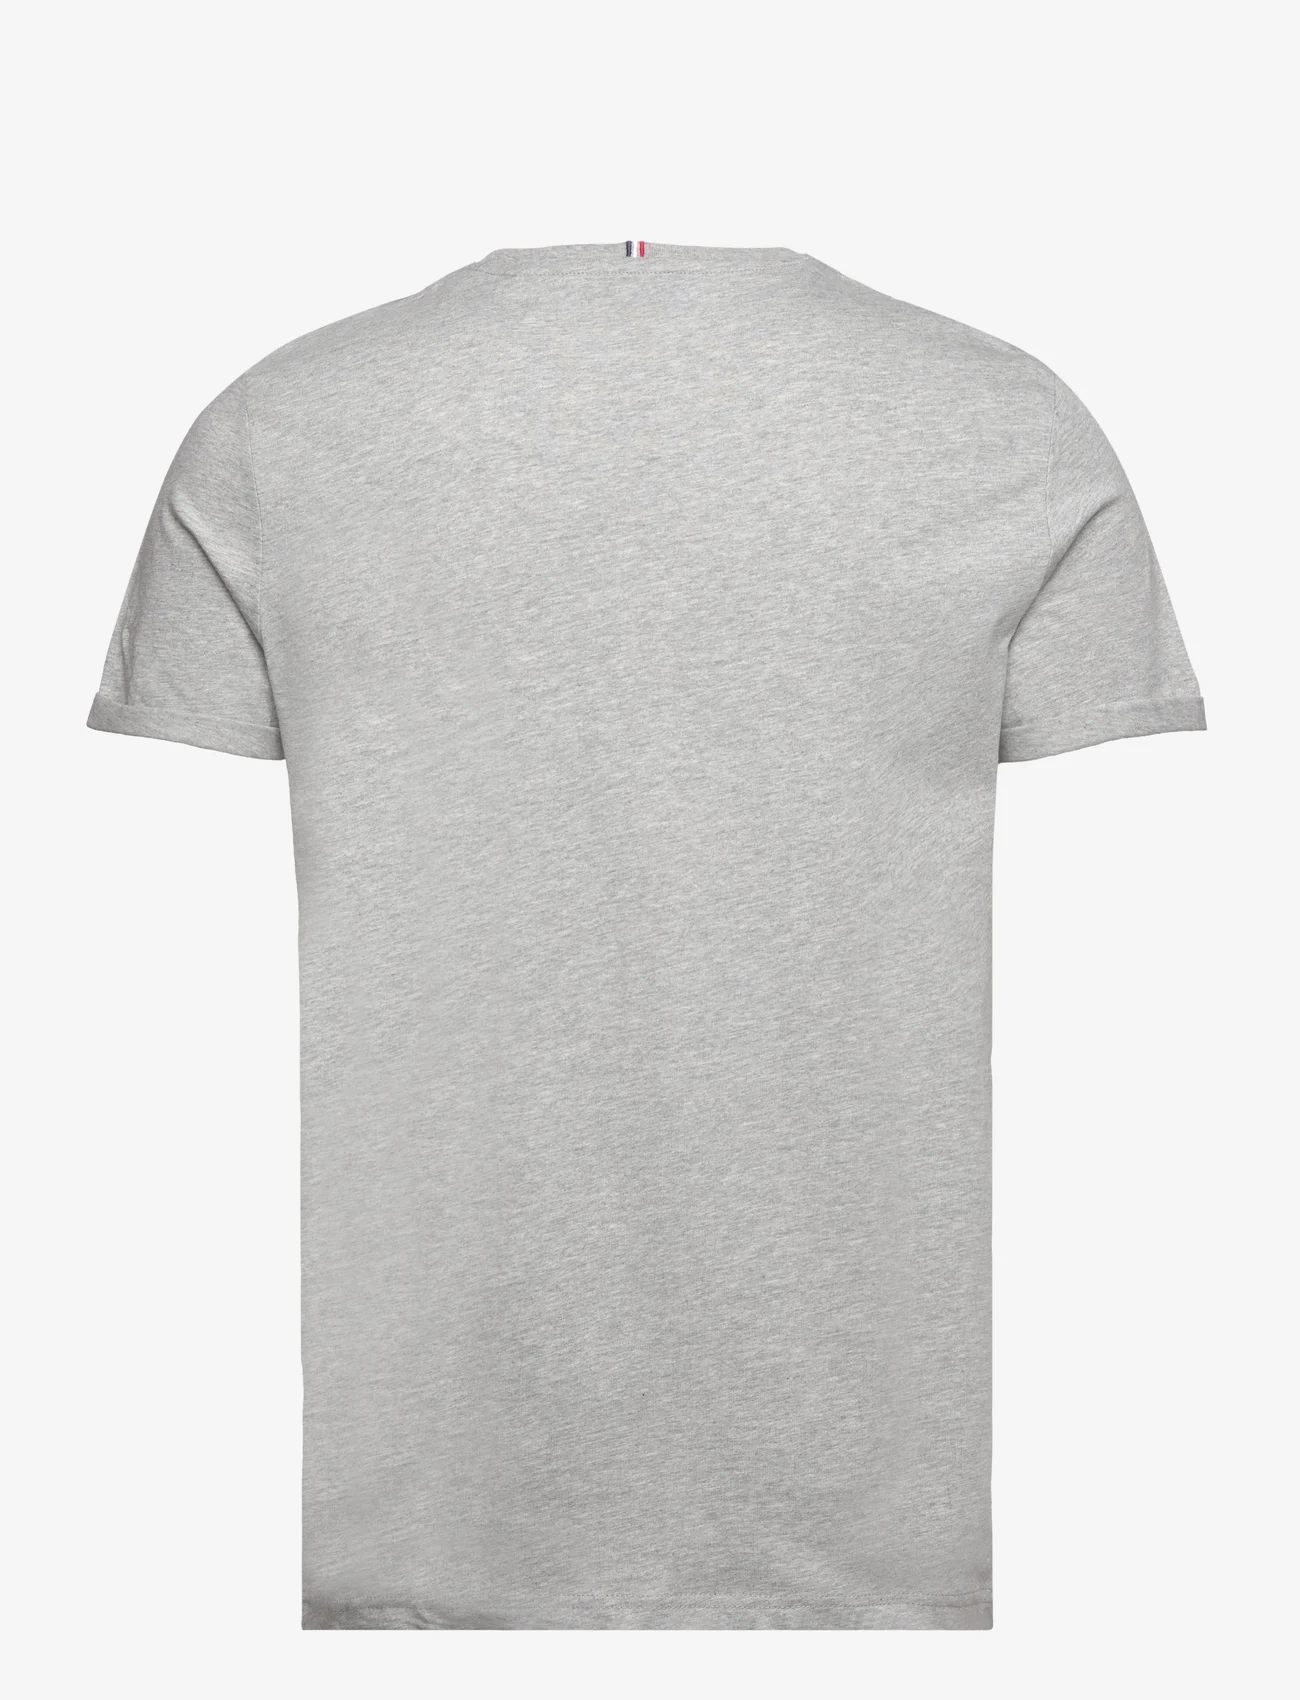 Les Deux - Les Deux II T-Shirt 2.0 - marškinėliai trumpomis rankovėmis - light grey melange/white - 1